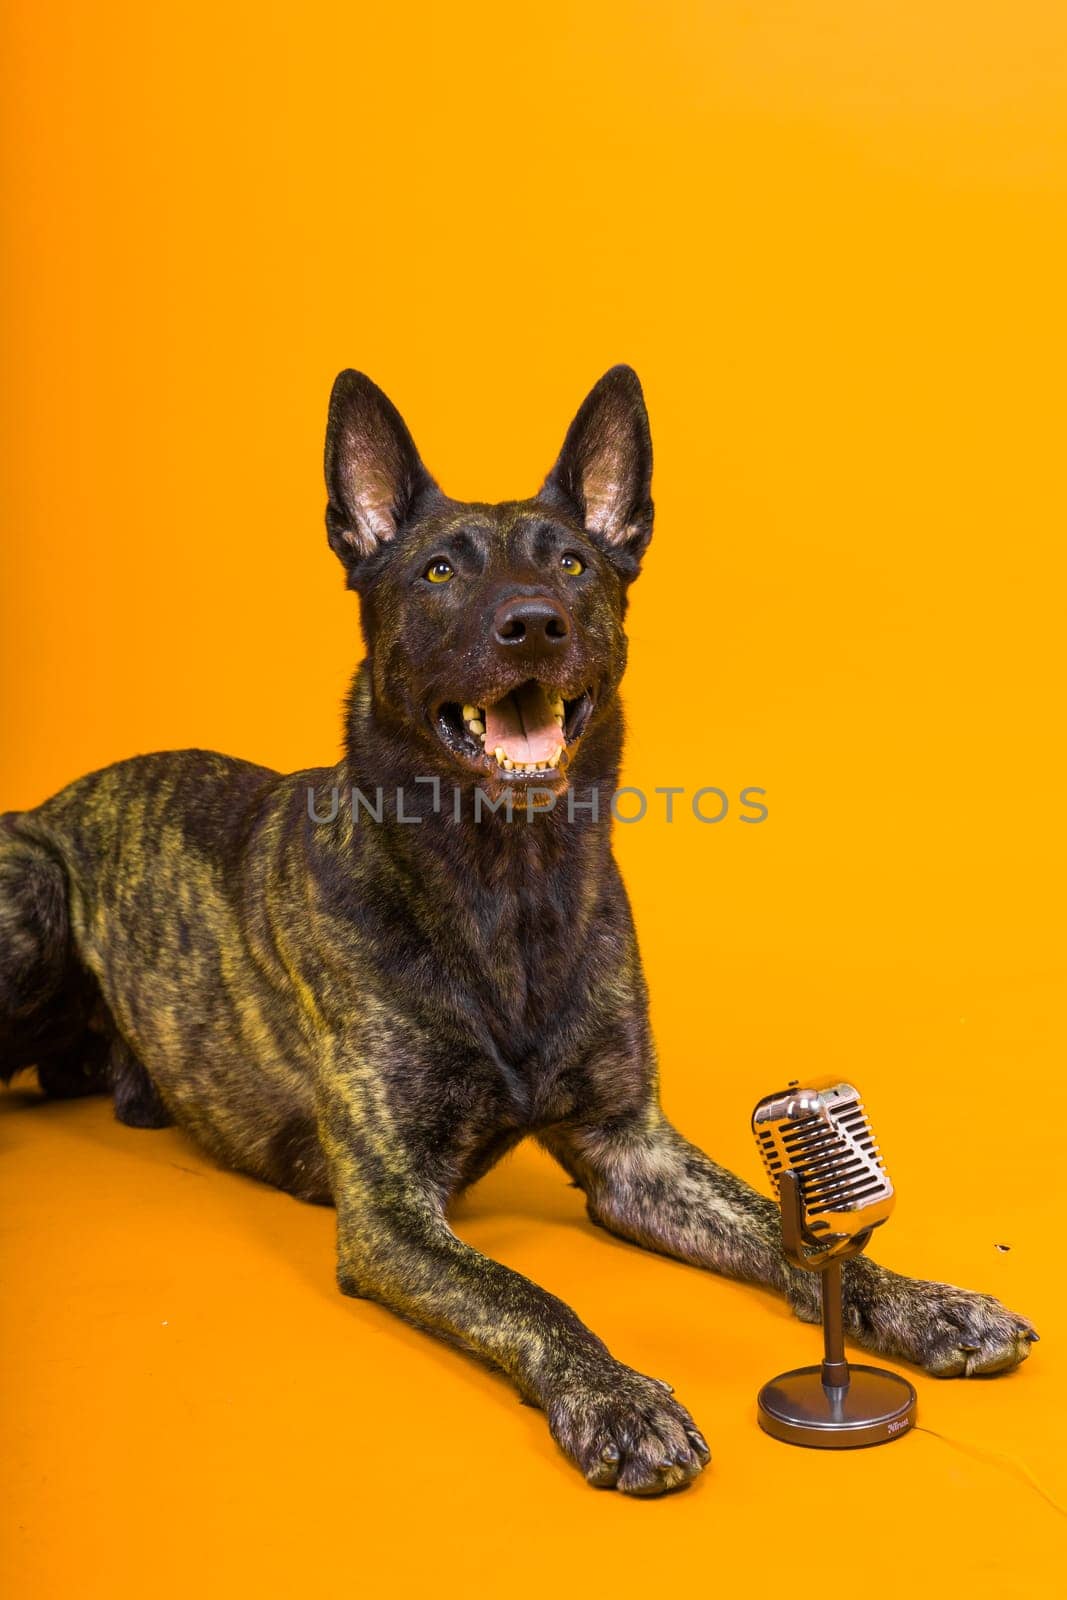 Cute singing dog Dutch shepherd in studio red yellow background